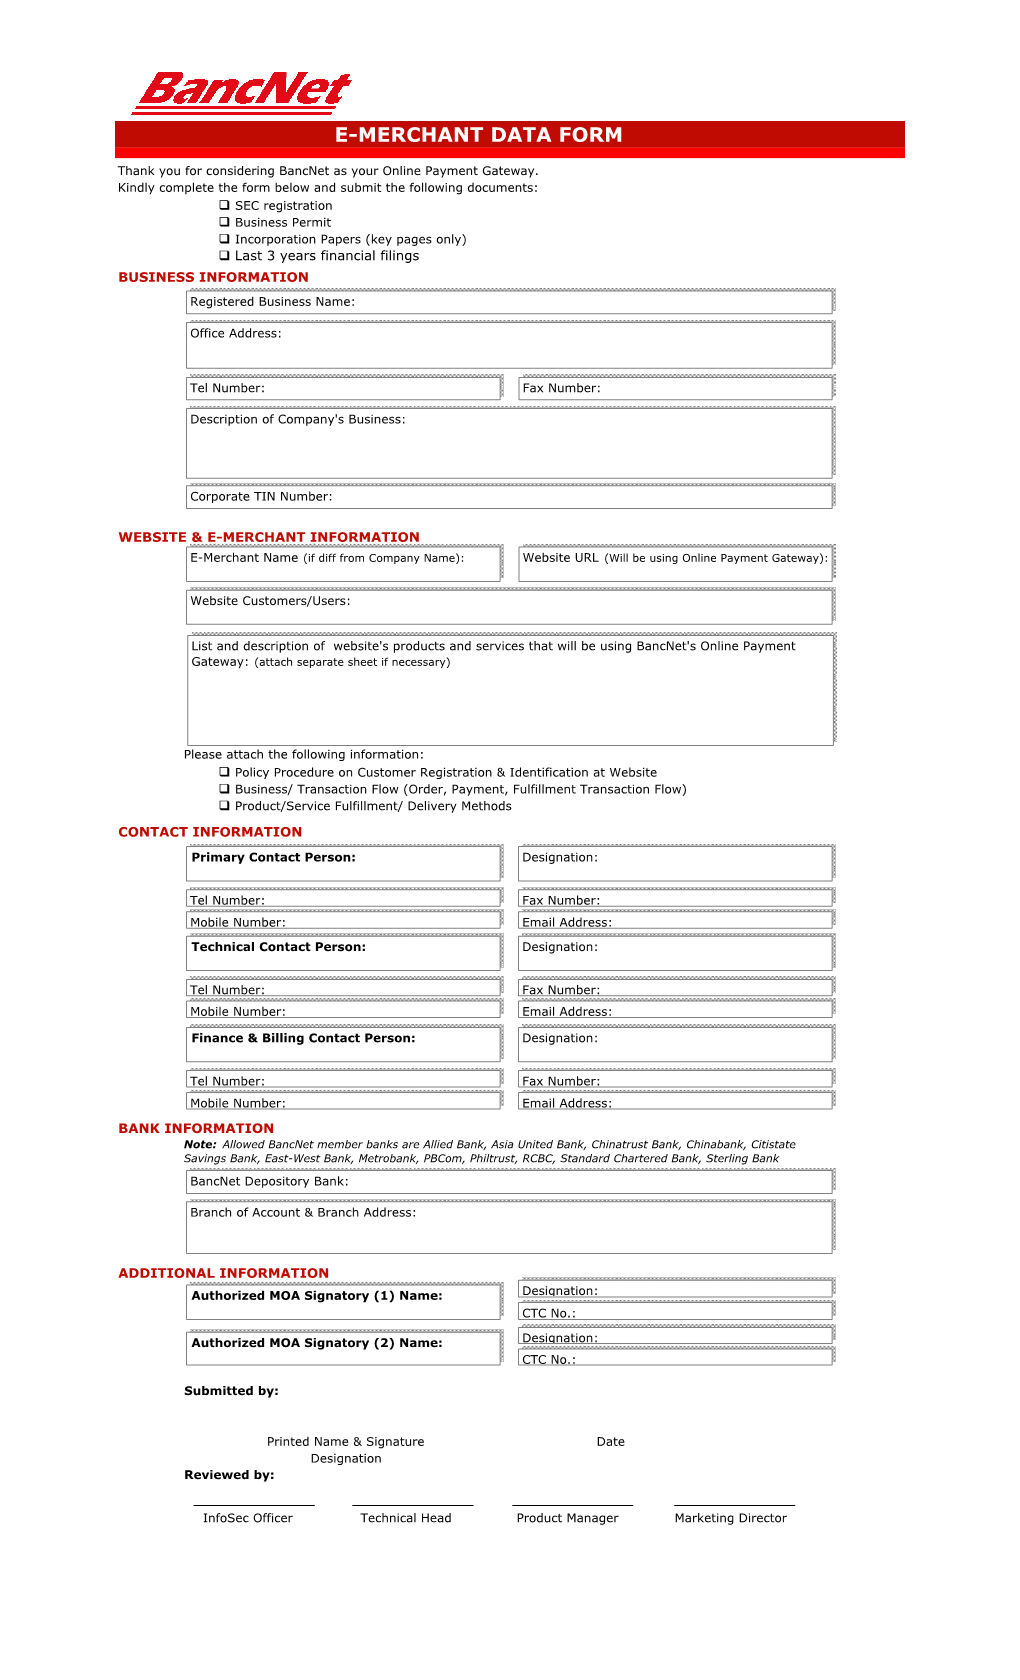 Bancnetonline Assesment Form 2008 V2.1